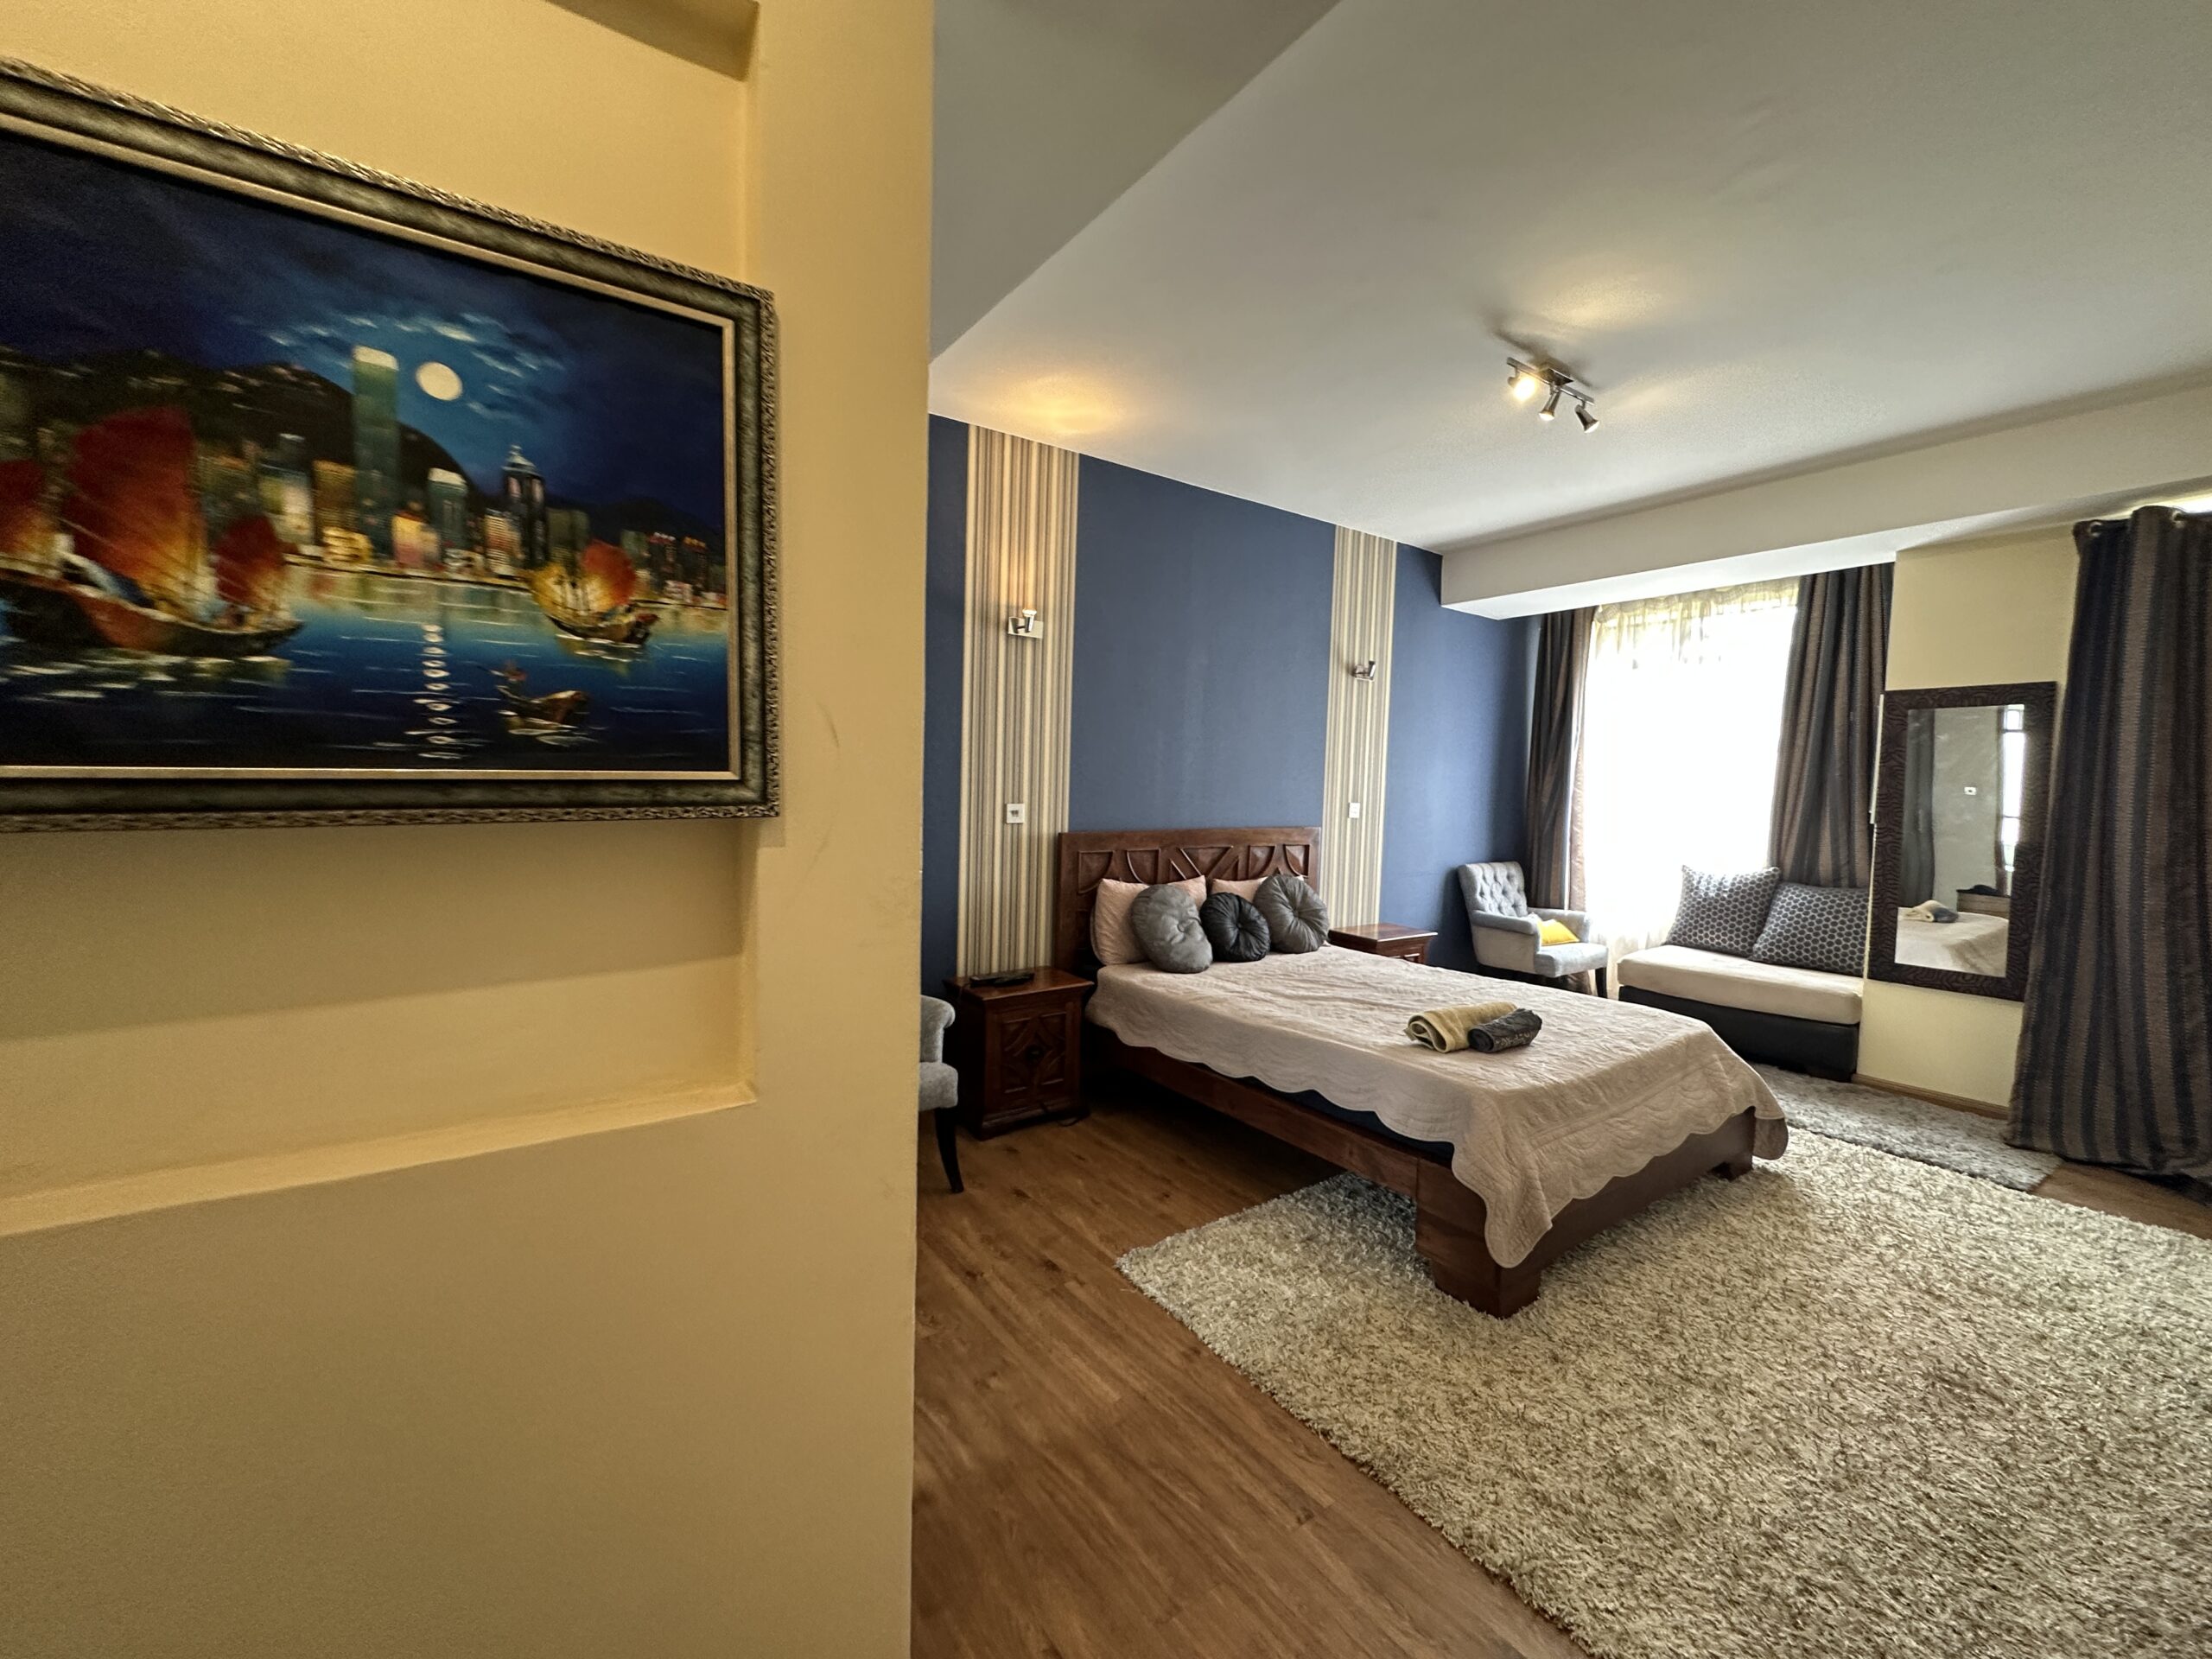 3 bedroom Apartments / Flats to Rent in Kileleshwa